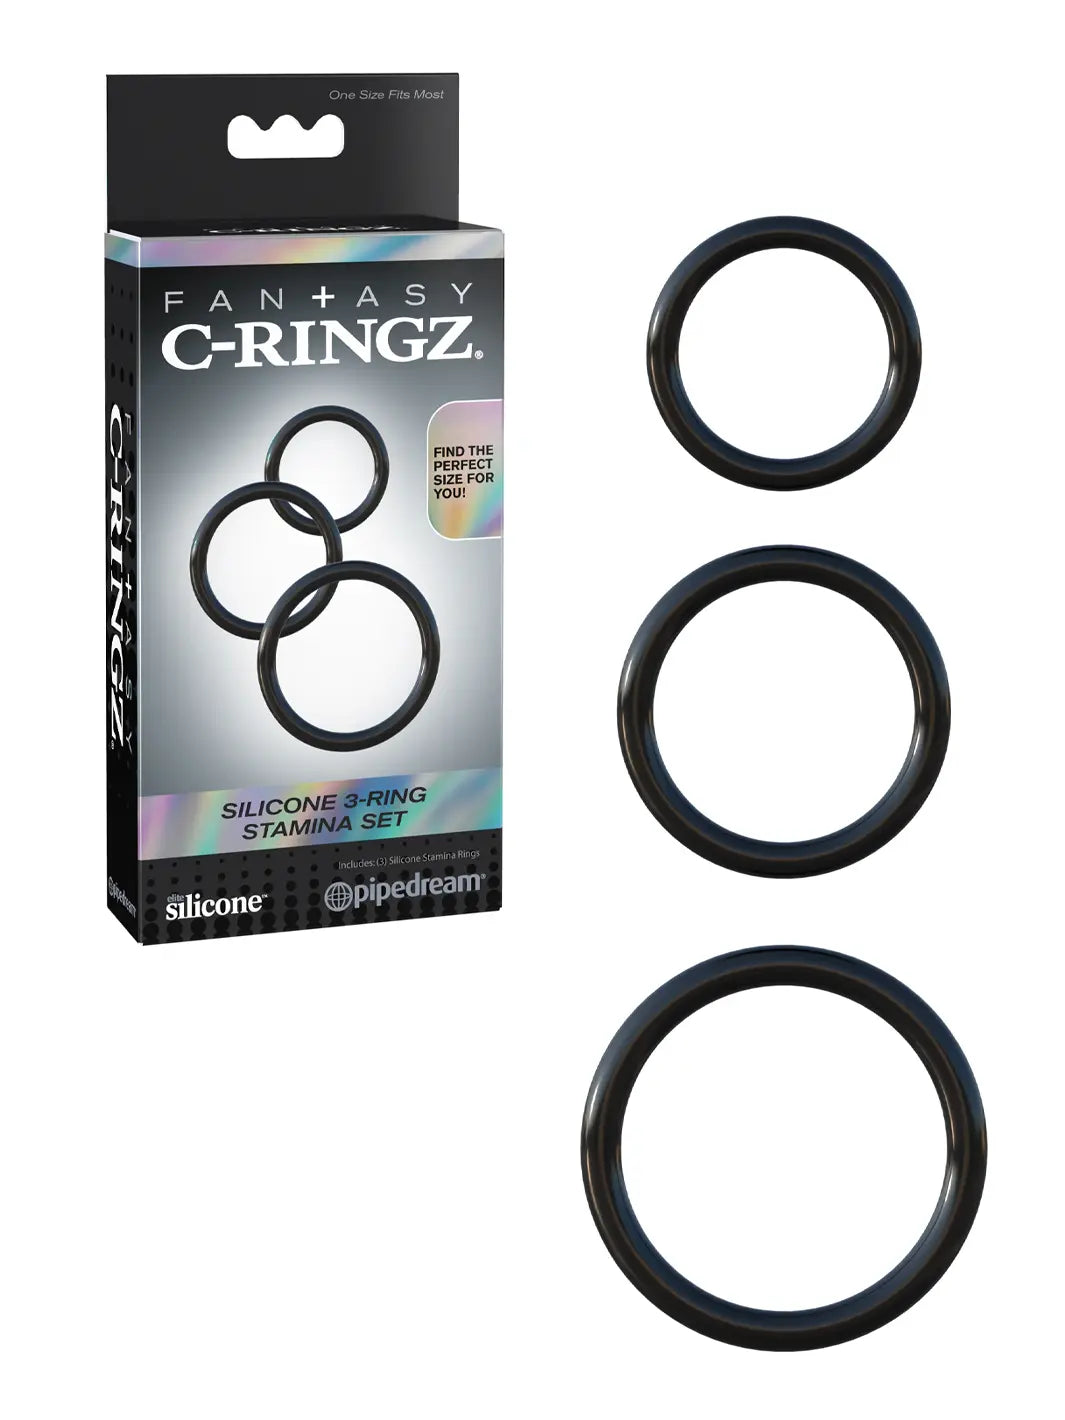 Fantasy C-Ringz Silicone 3-Ring Stamina Set - joujou.com.au